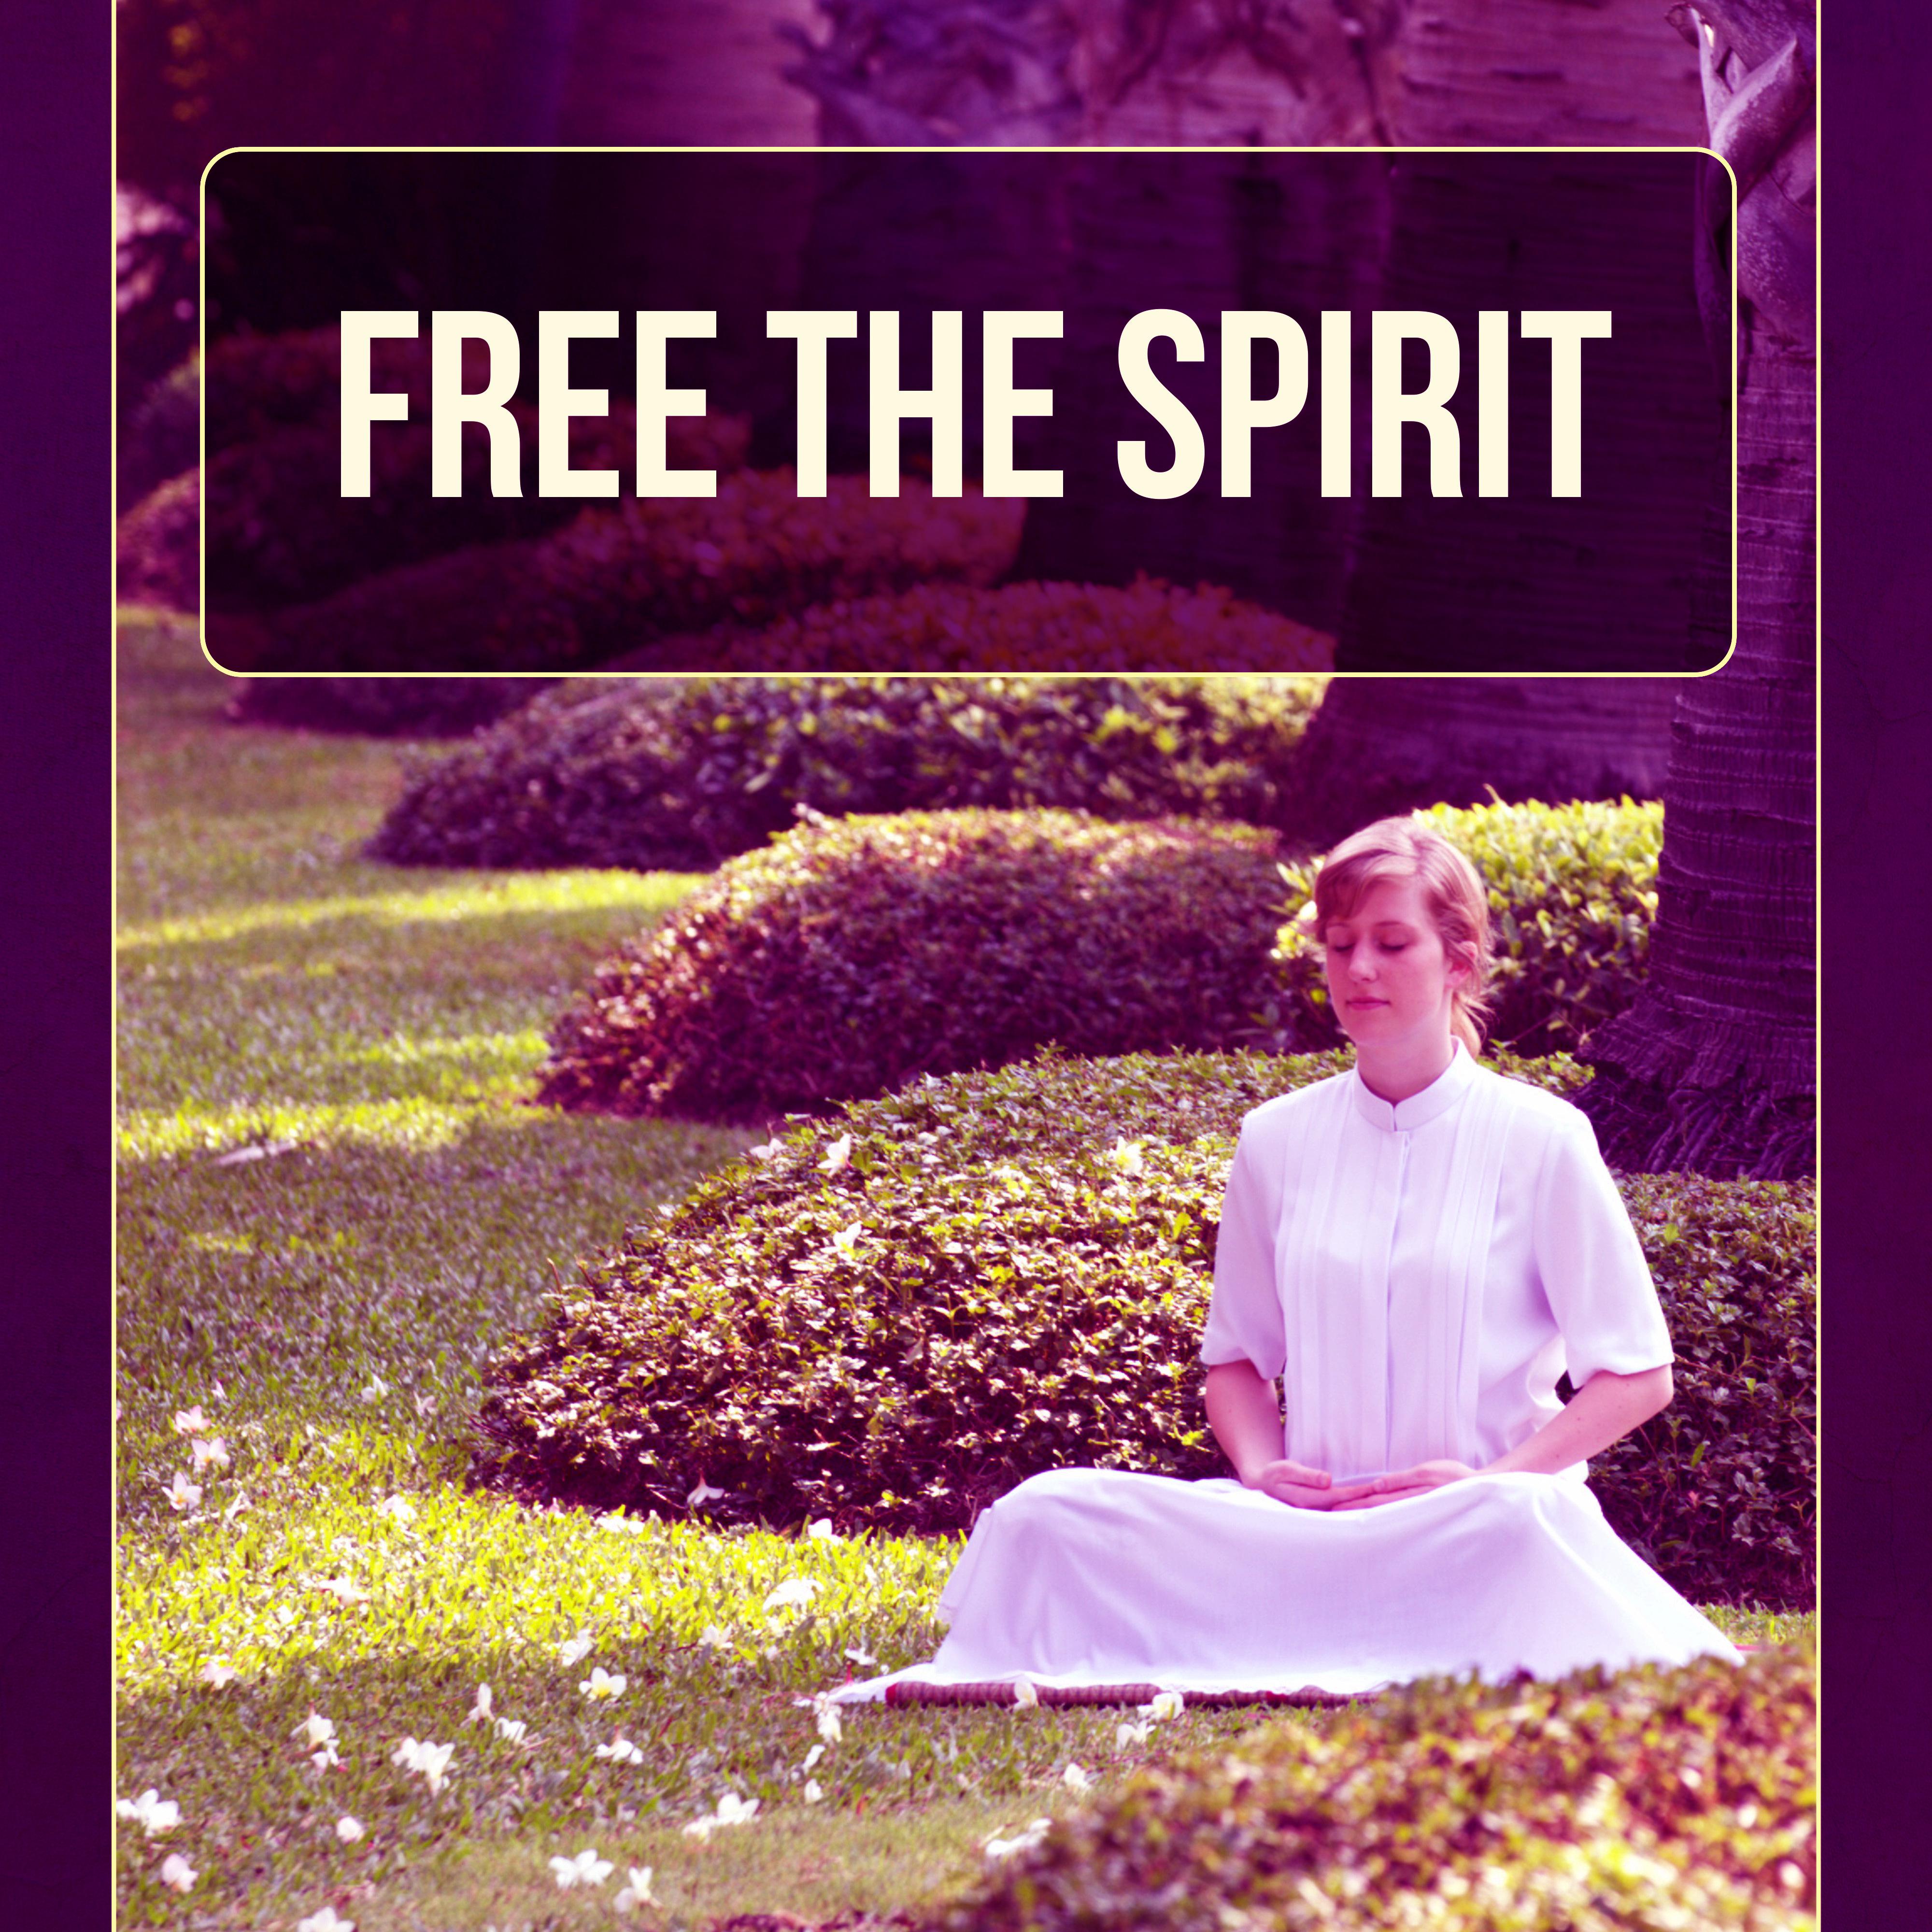 Free the Spirit – Feel The Spirit, Massage & Wellness, Hatha Yoga, Mantras, Breath Easy, Relaxation